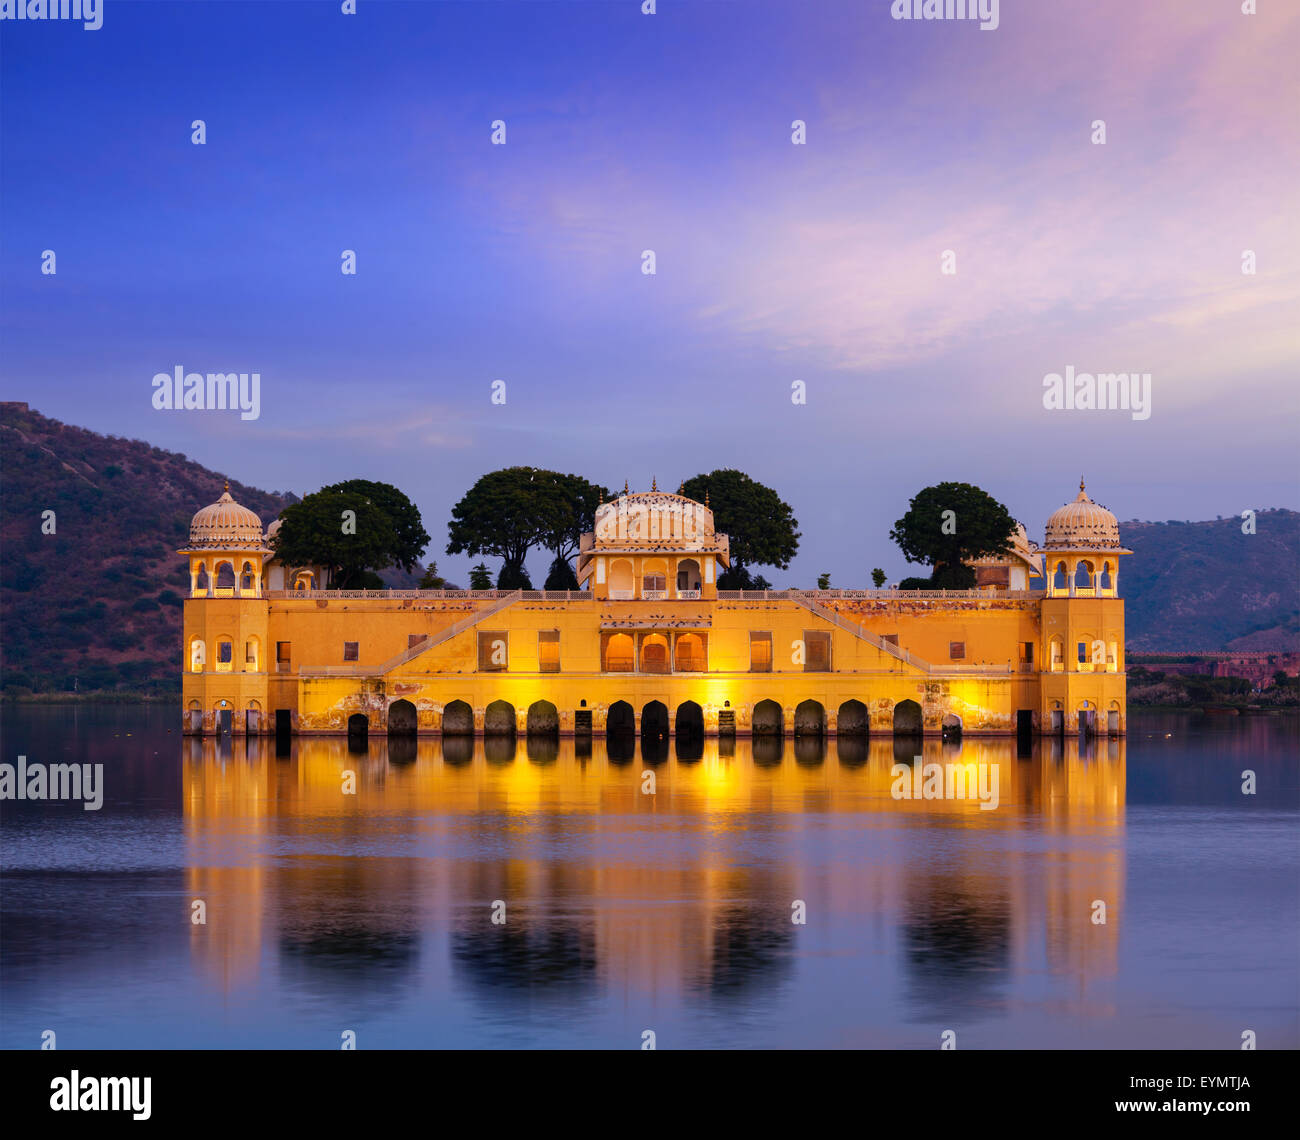 Rajasthan landmark - Jal Mahal Palace acqua sull'uomo Sagar lago la sera nel crepuscolo. Jaipur, Rajasthan, India Foto Stock